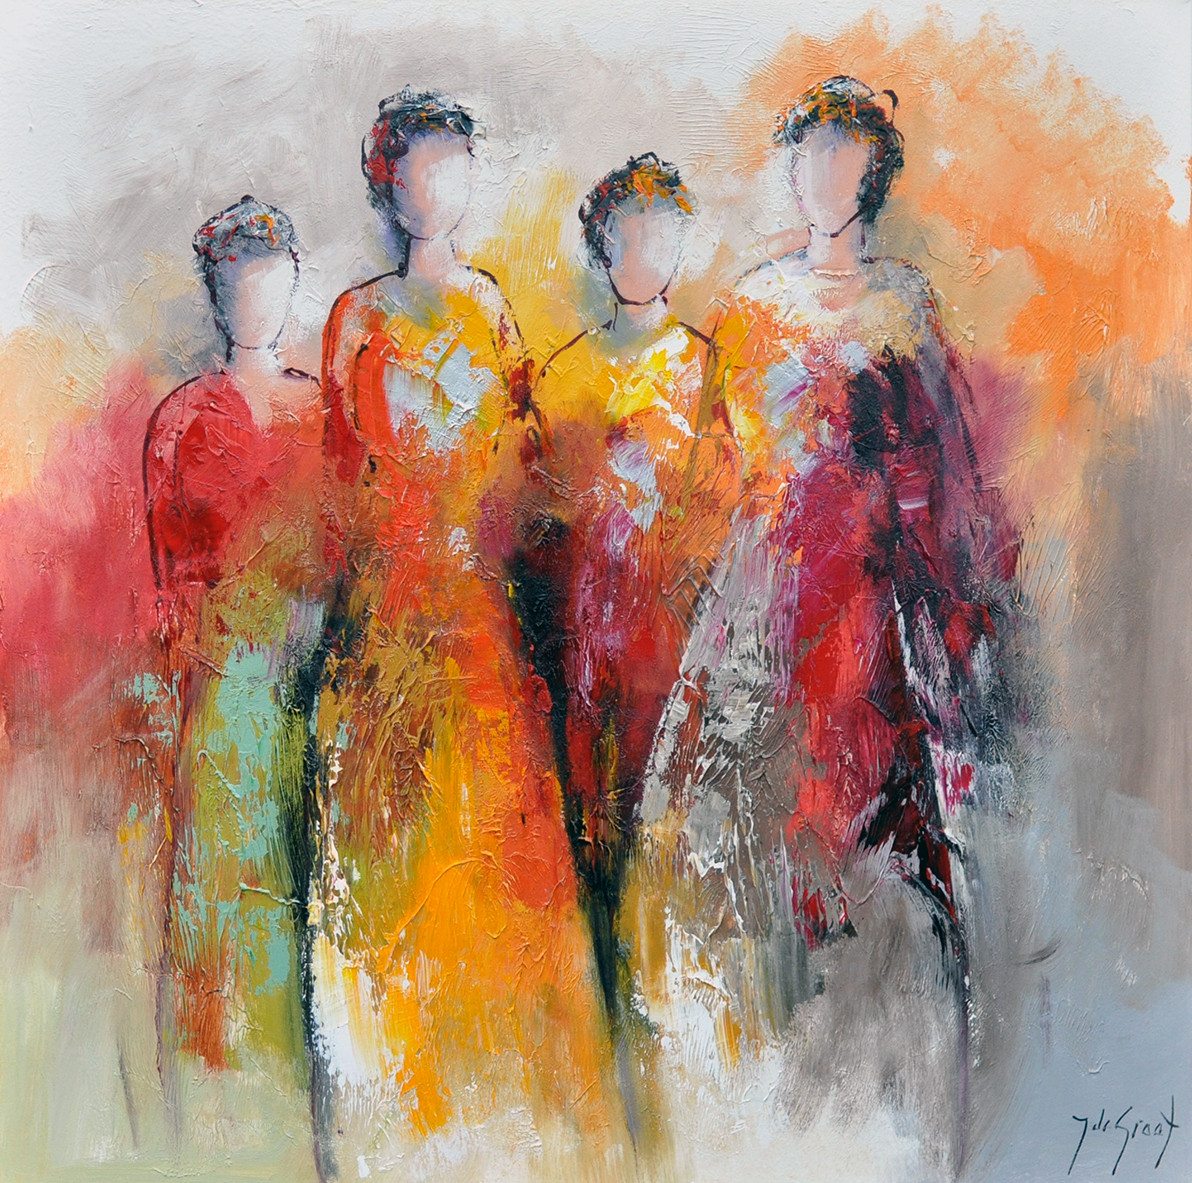 Jochem de Graaf + The four ladies